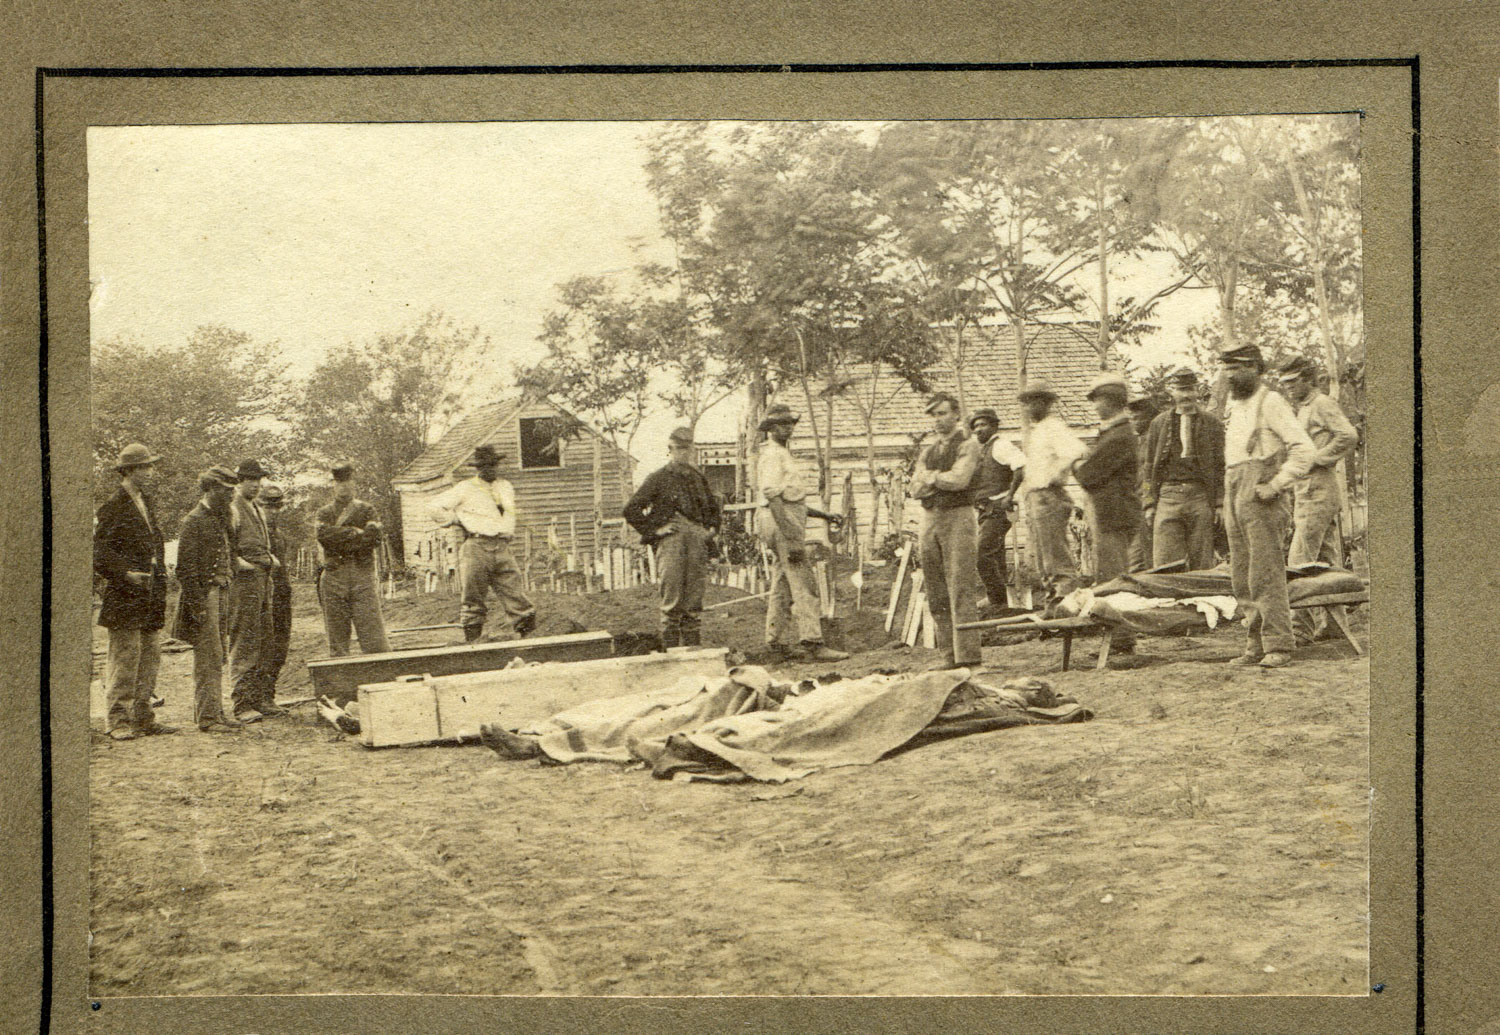 Burial Party at Fredericksburg in December 1862